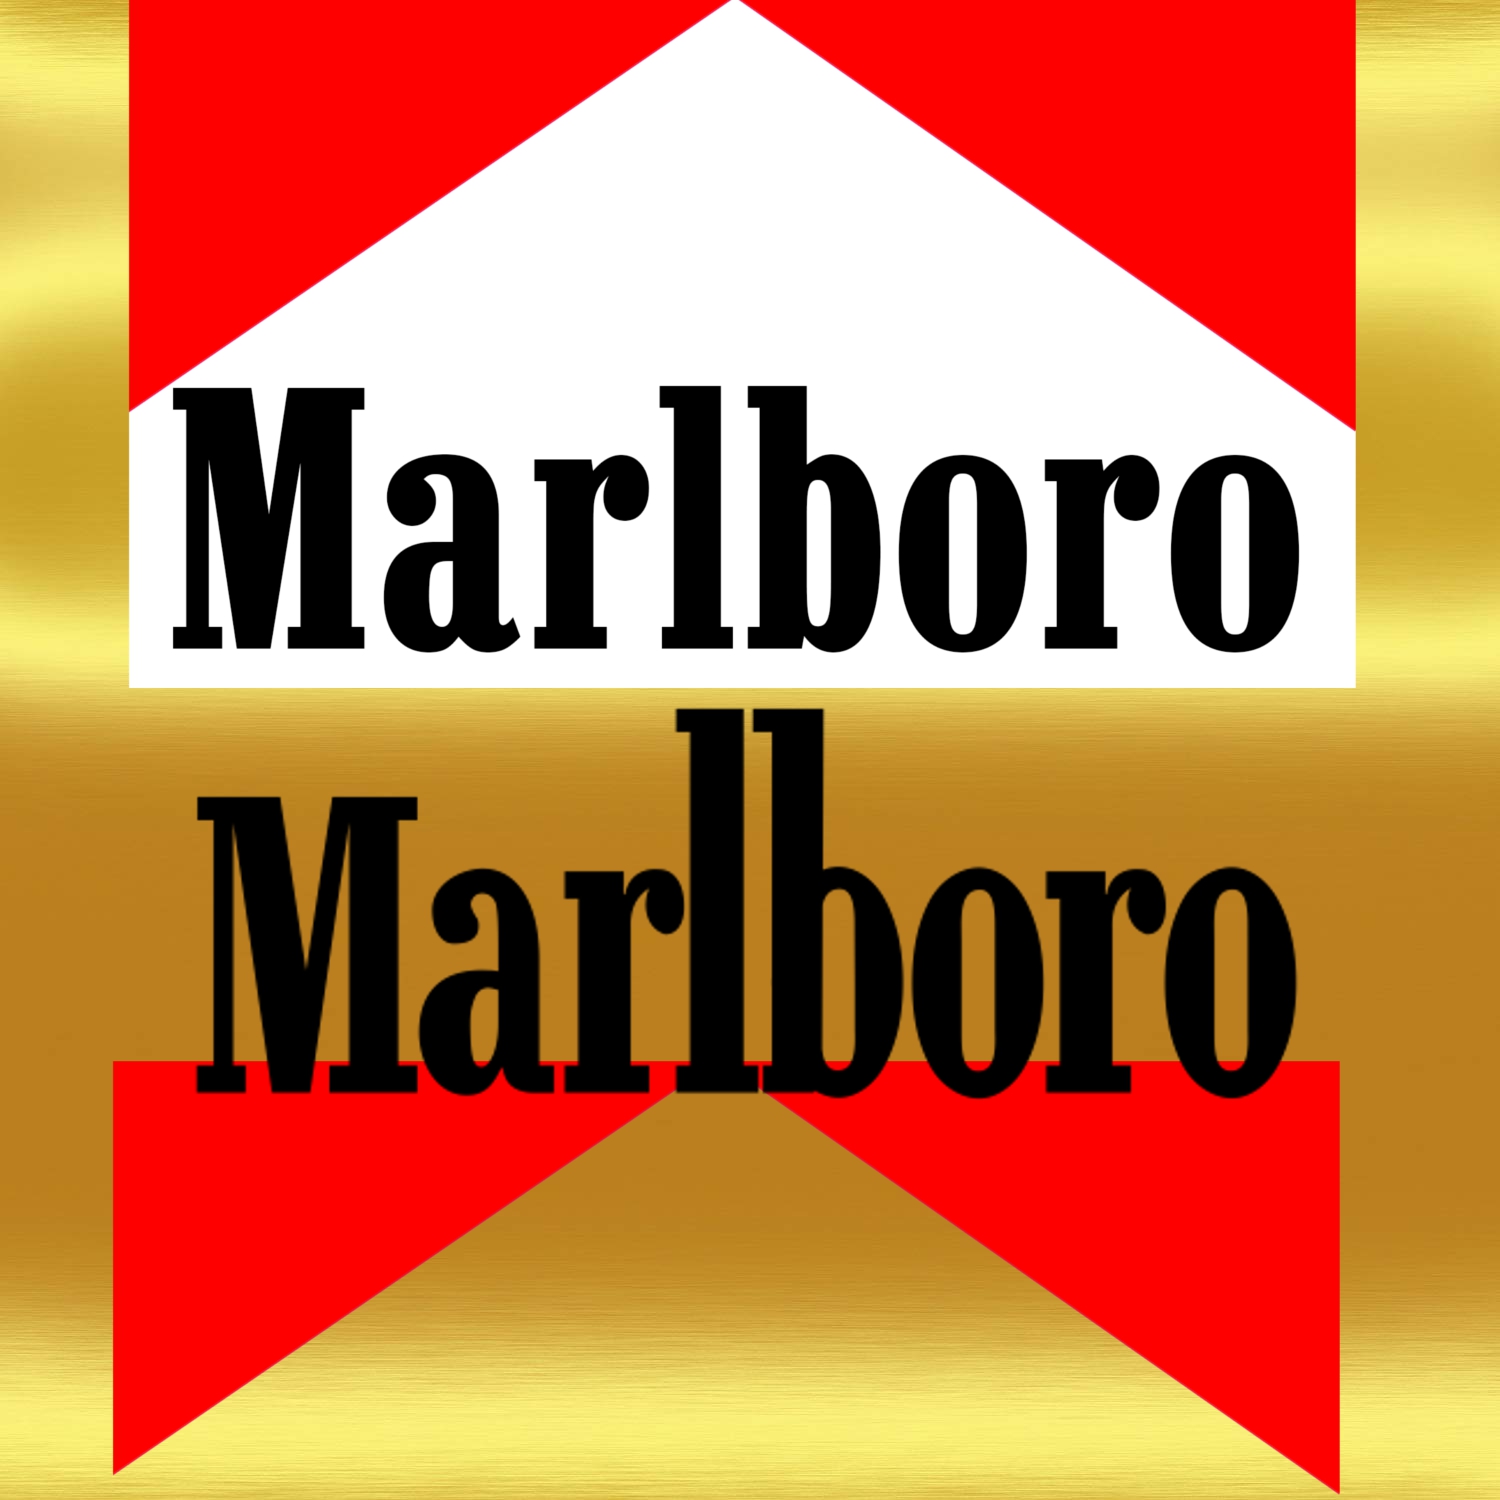 Mrlboro logos.jpg